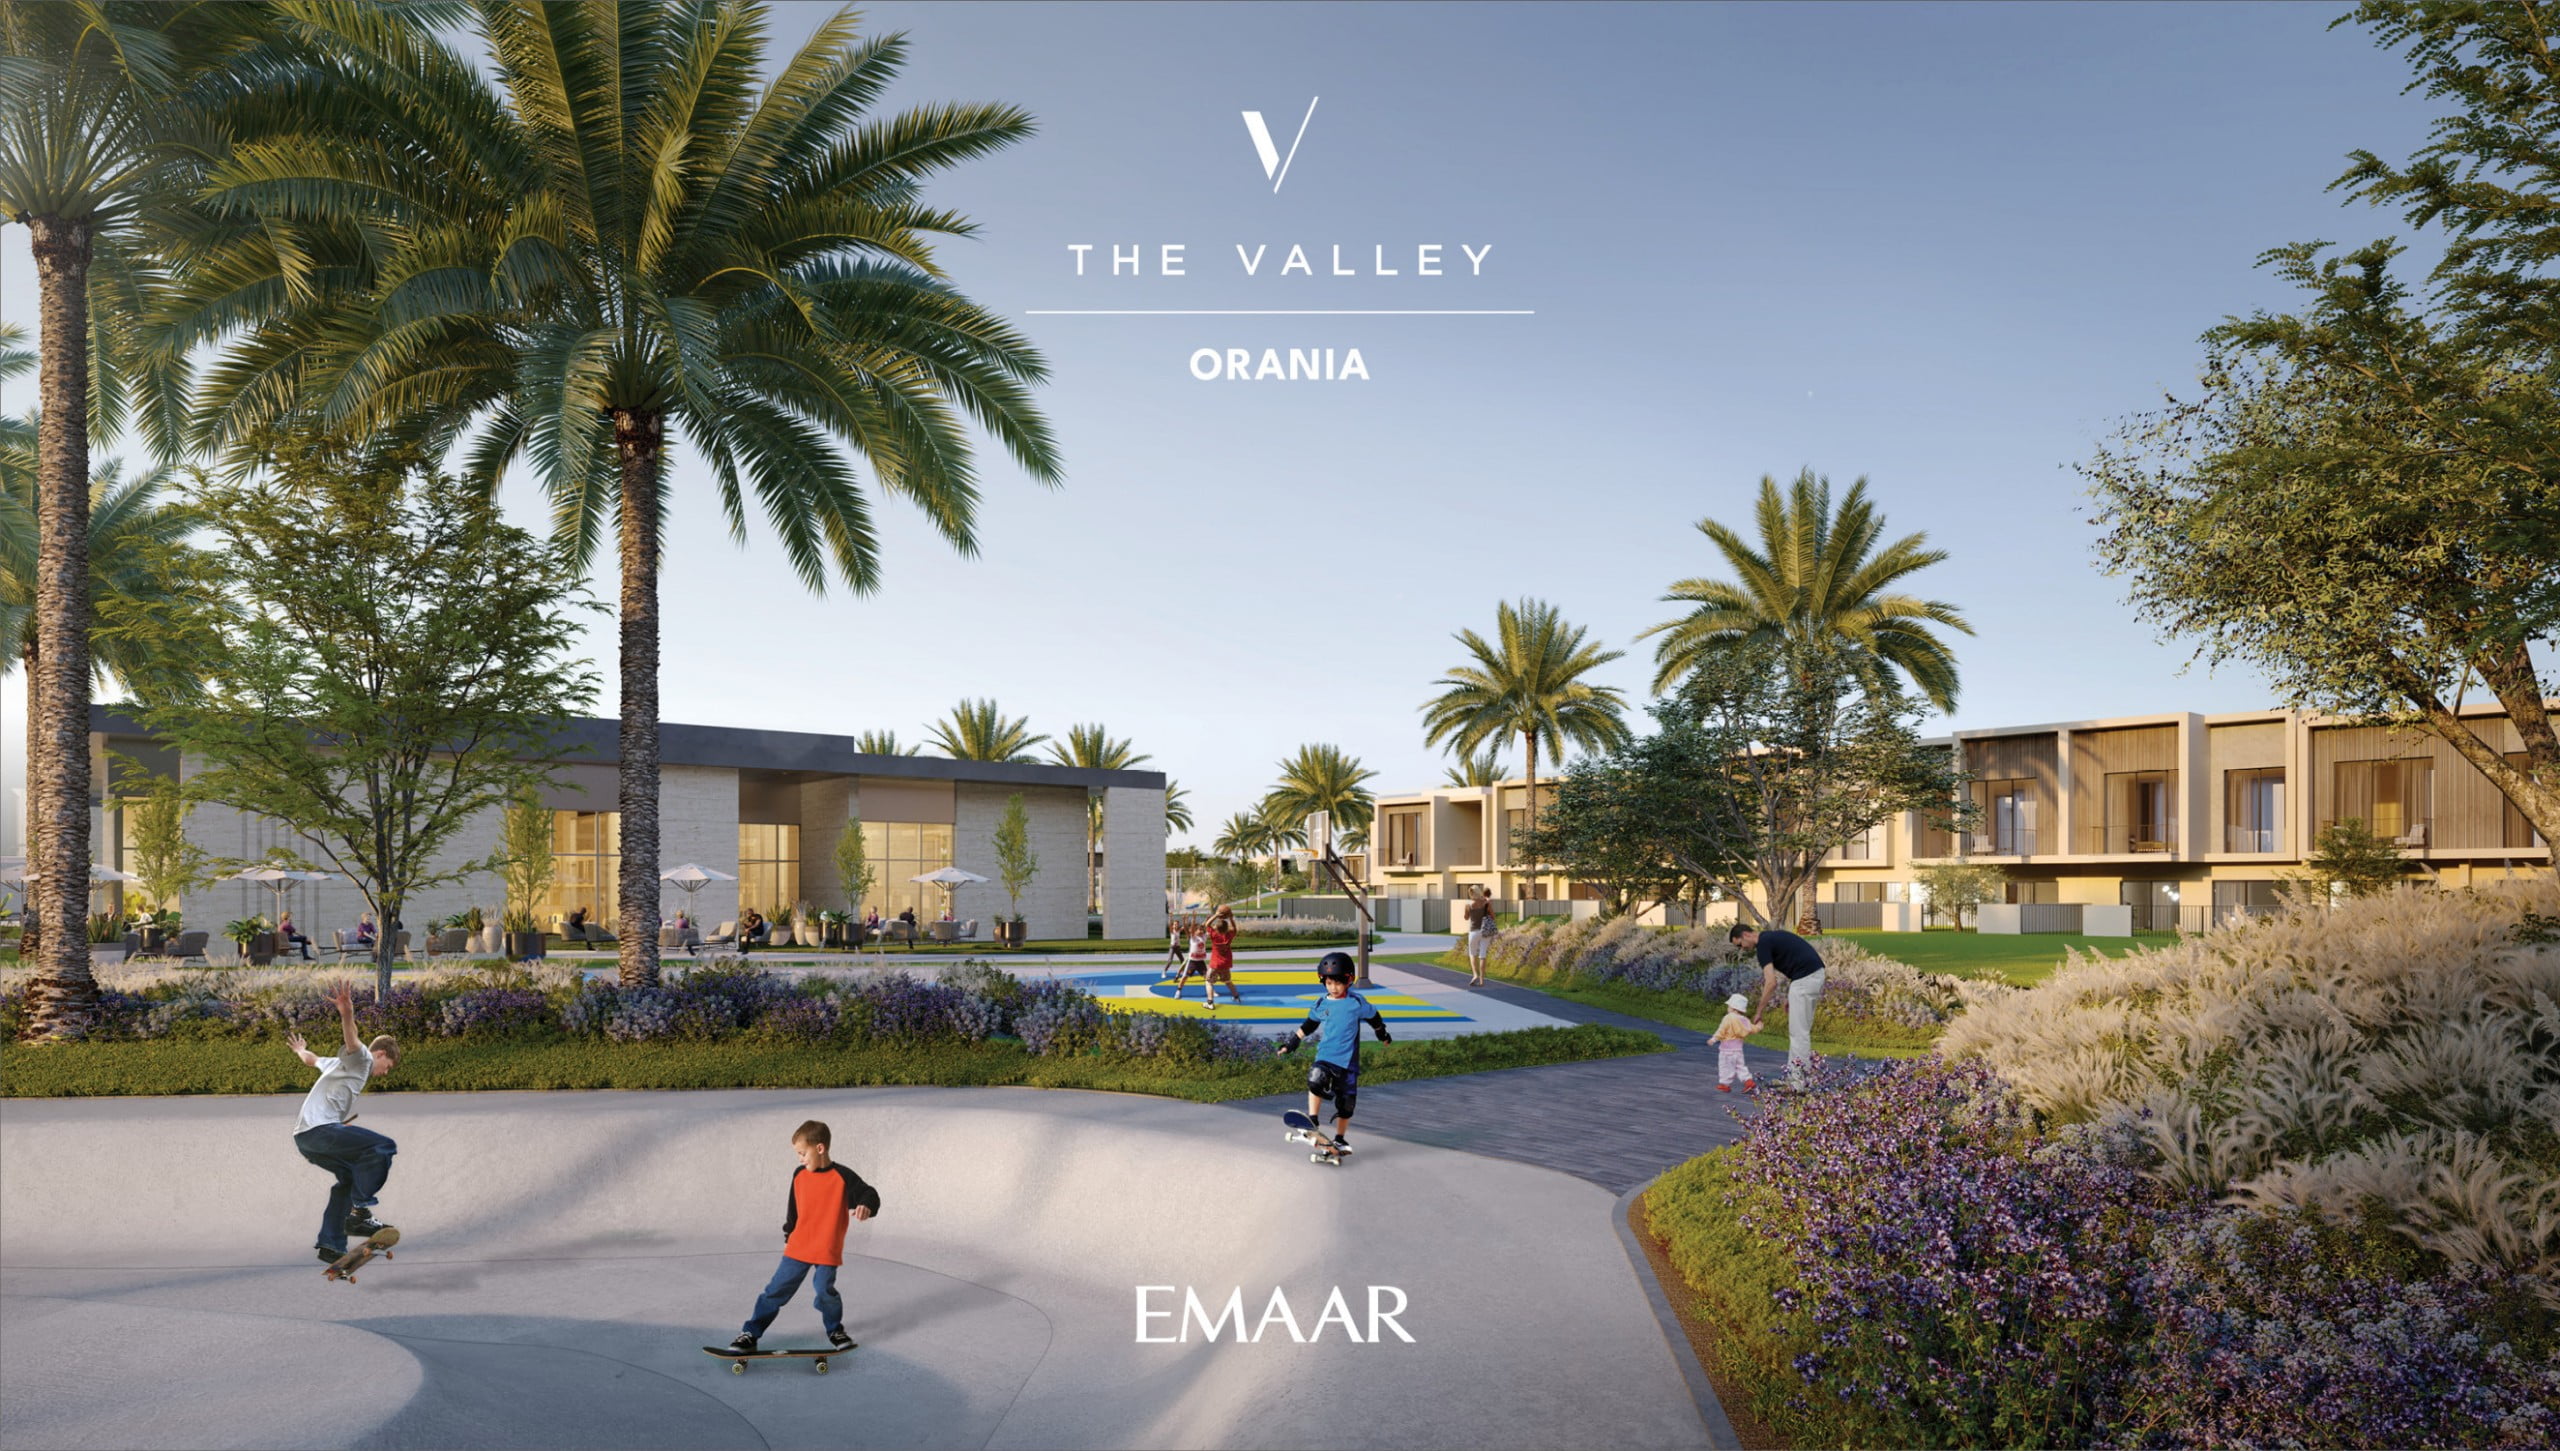 ORANIA THE VALLEY EMAAR 11 scaled - Immobilier Dubai